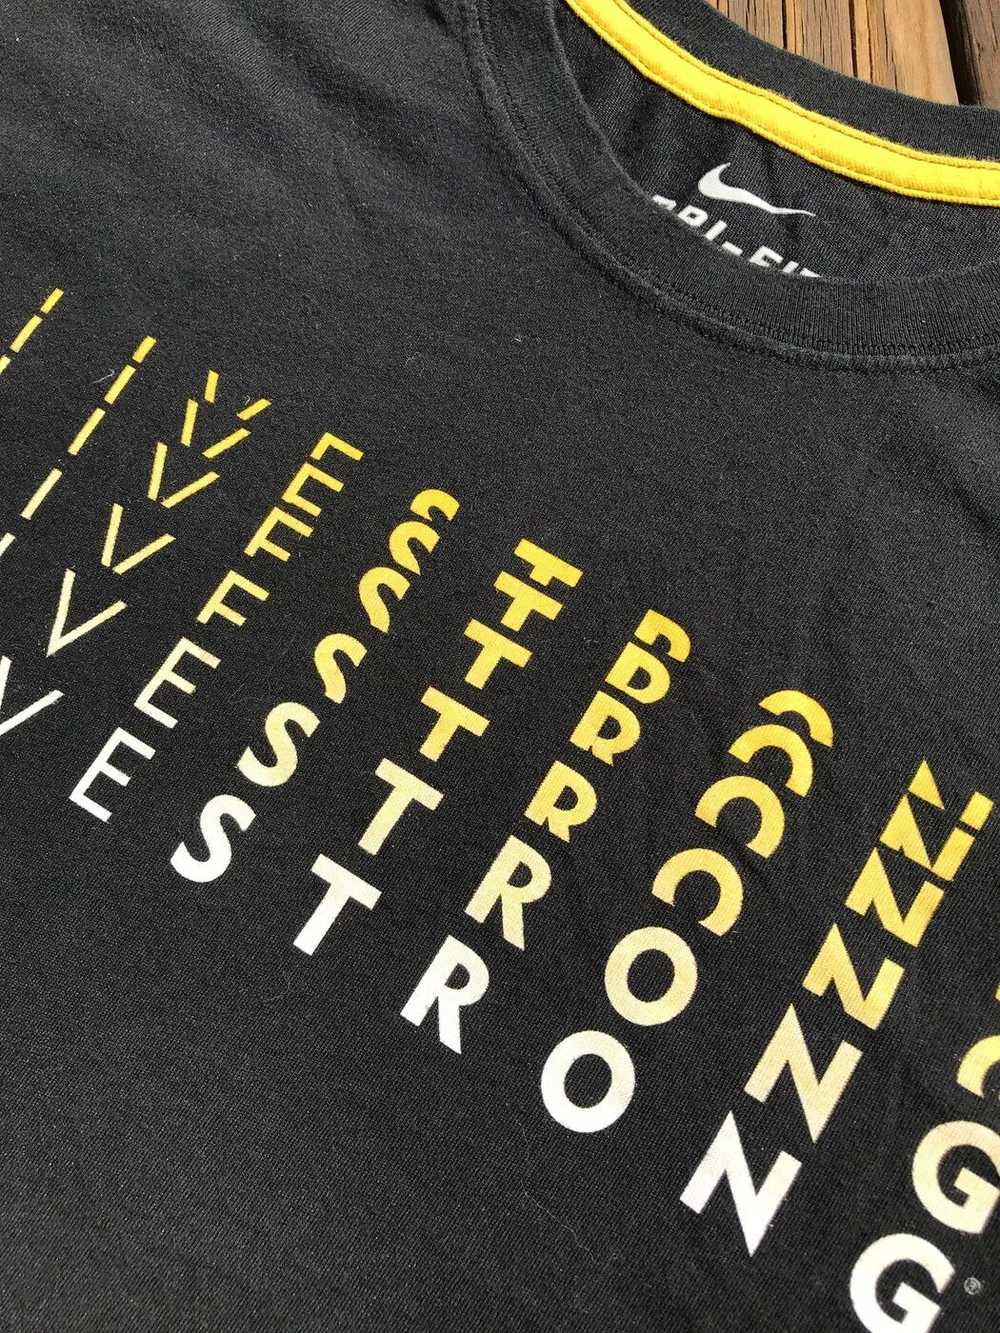 Nike Live strong T-Shirt Lance Armstrong Black - image 3